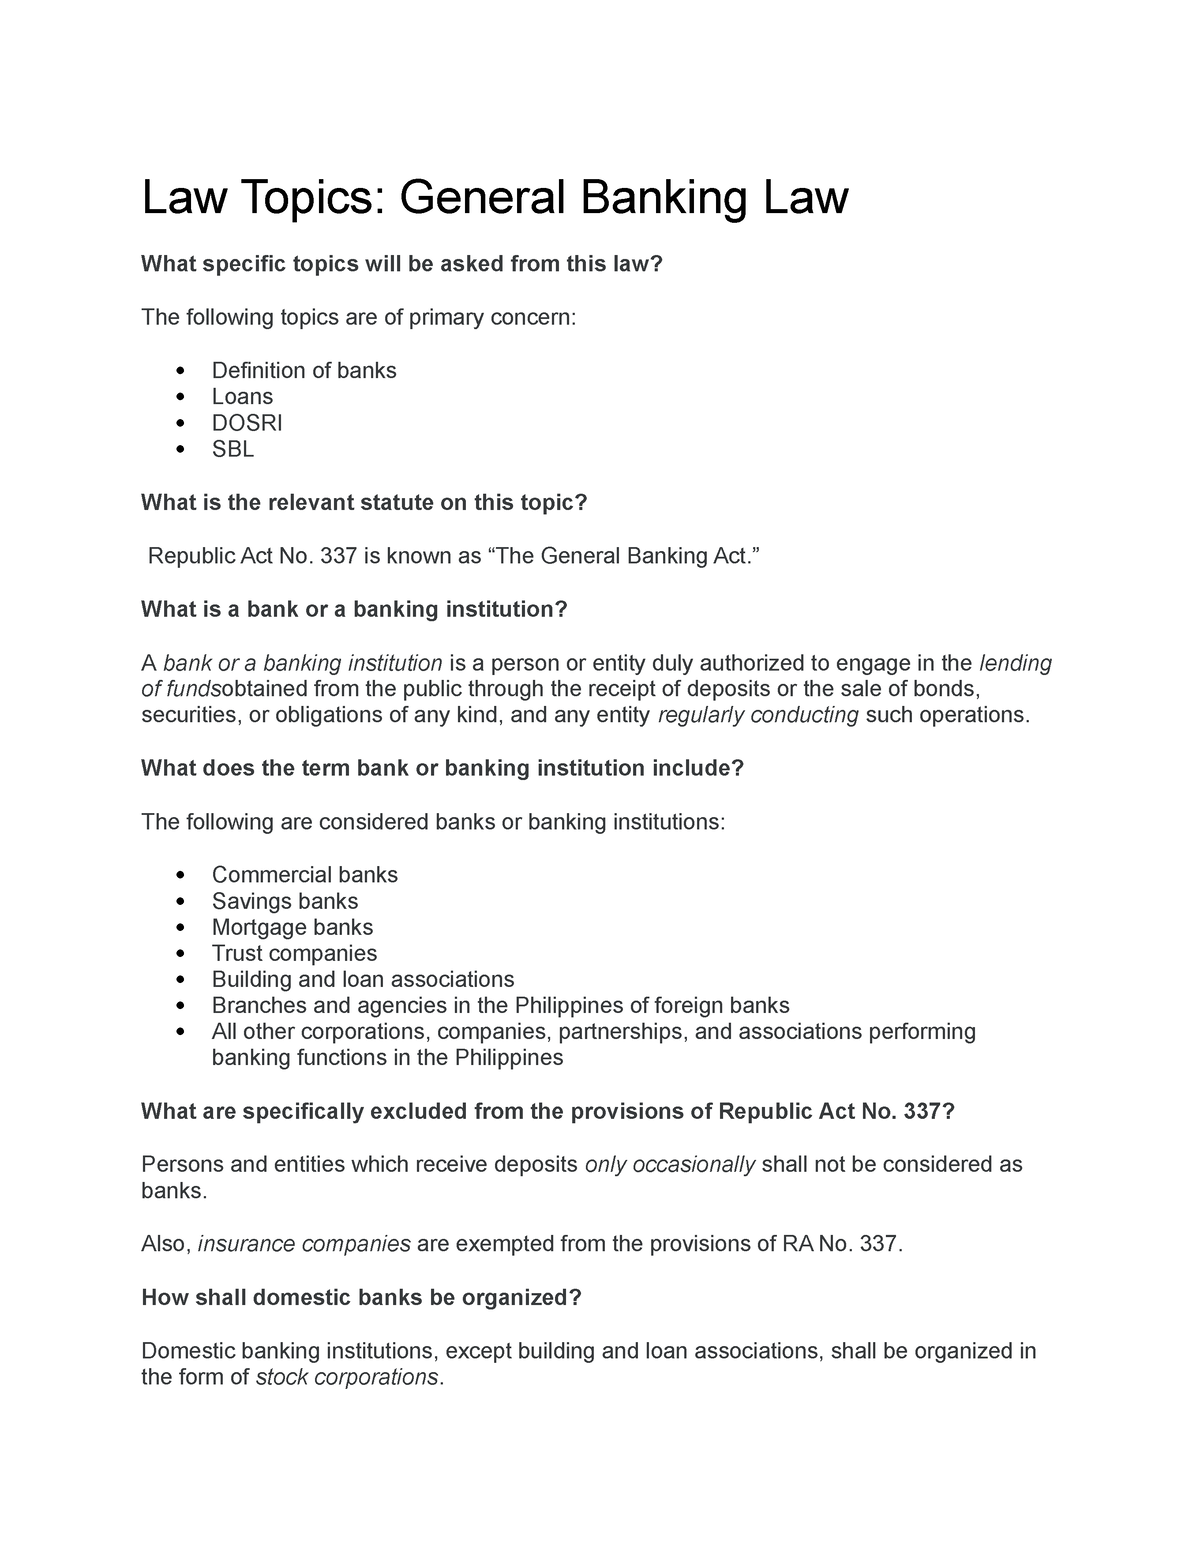 llm dissertation topics in banking law